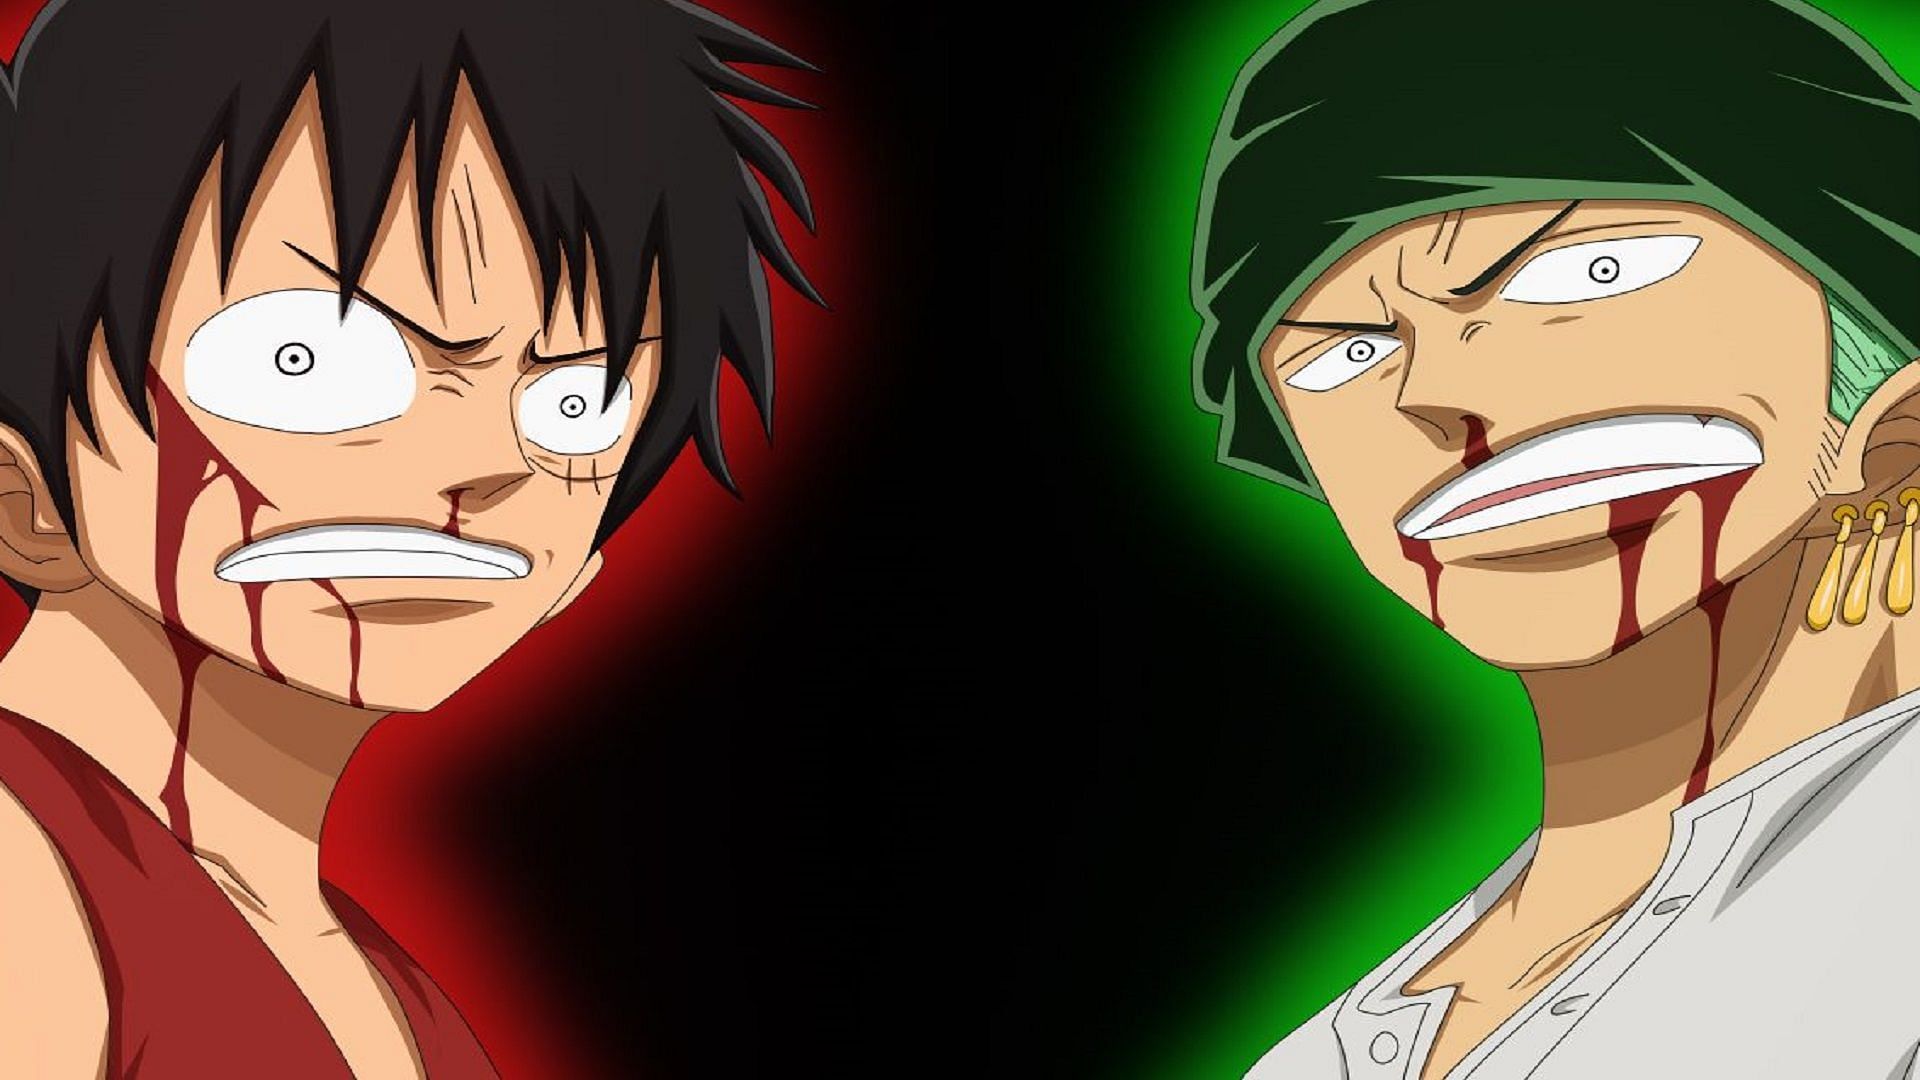 The battle between Luffy and Zoro in Whisky Peak is just unforgettable (Image via Eiichiro Oda/Shueisha, One Piece)